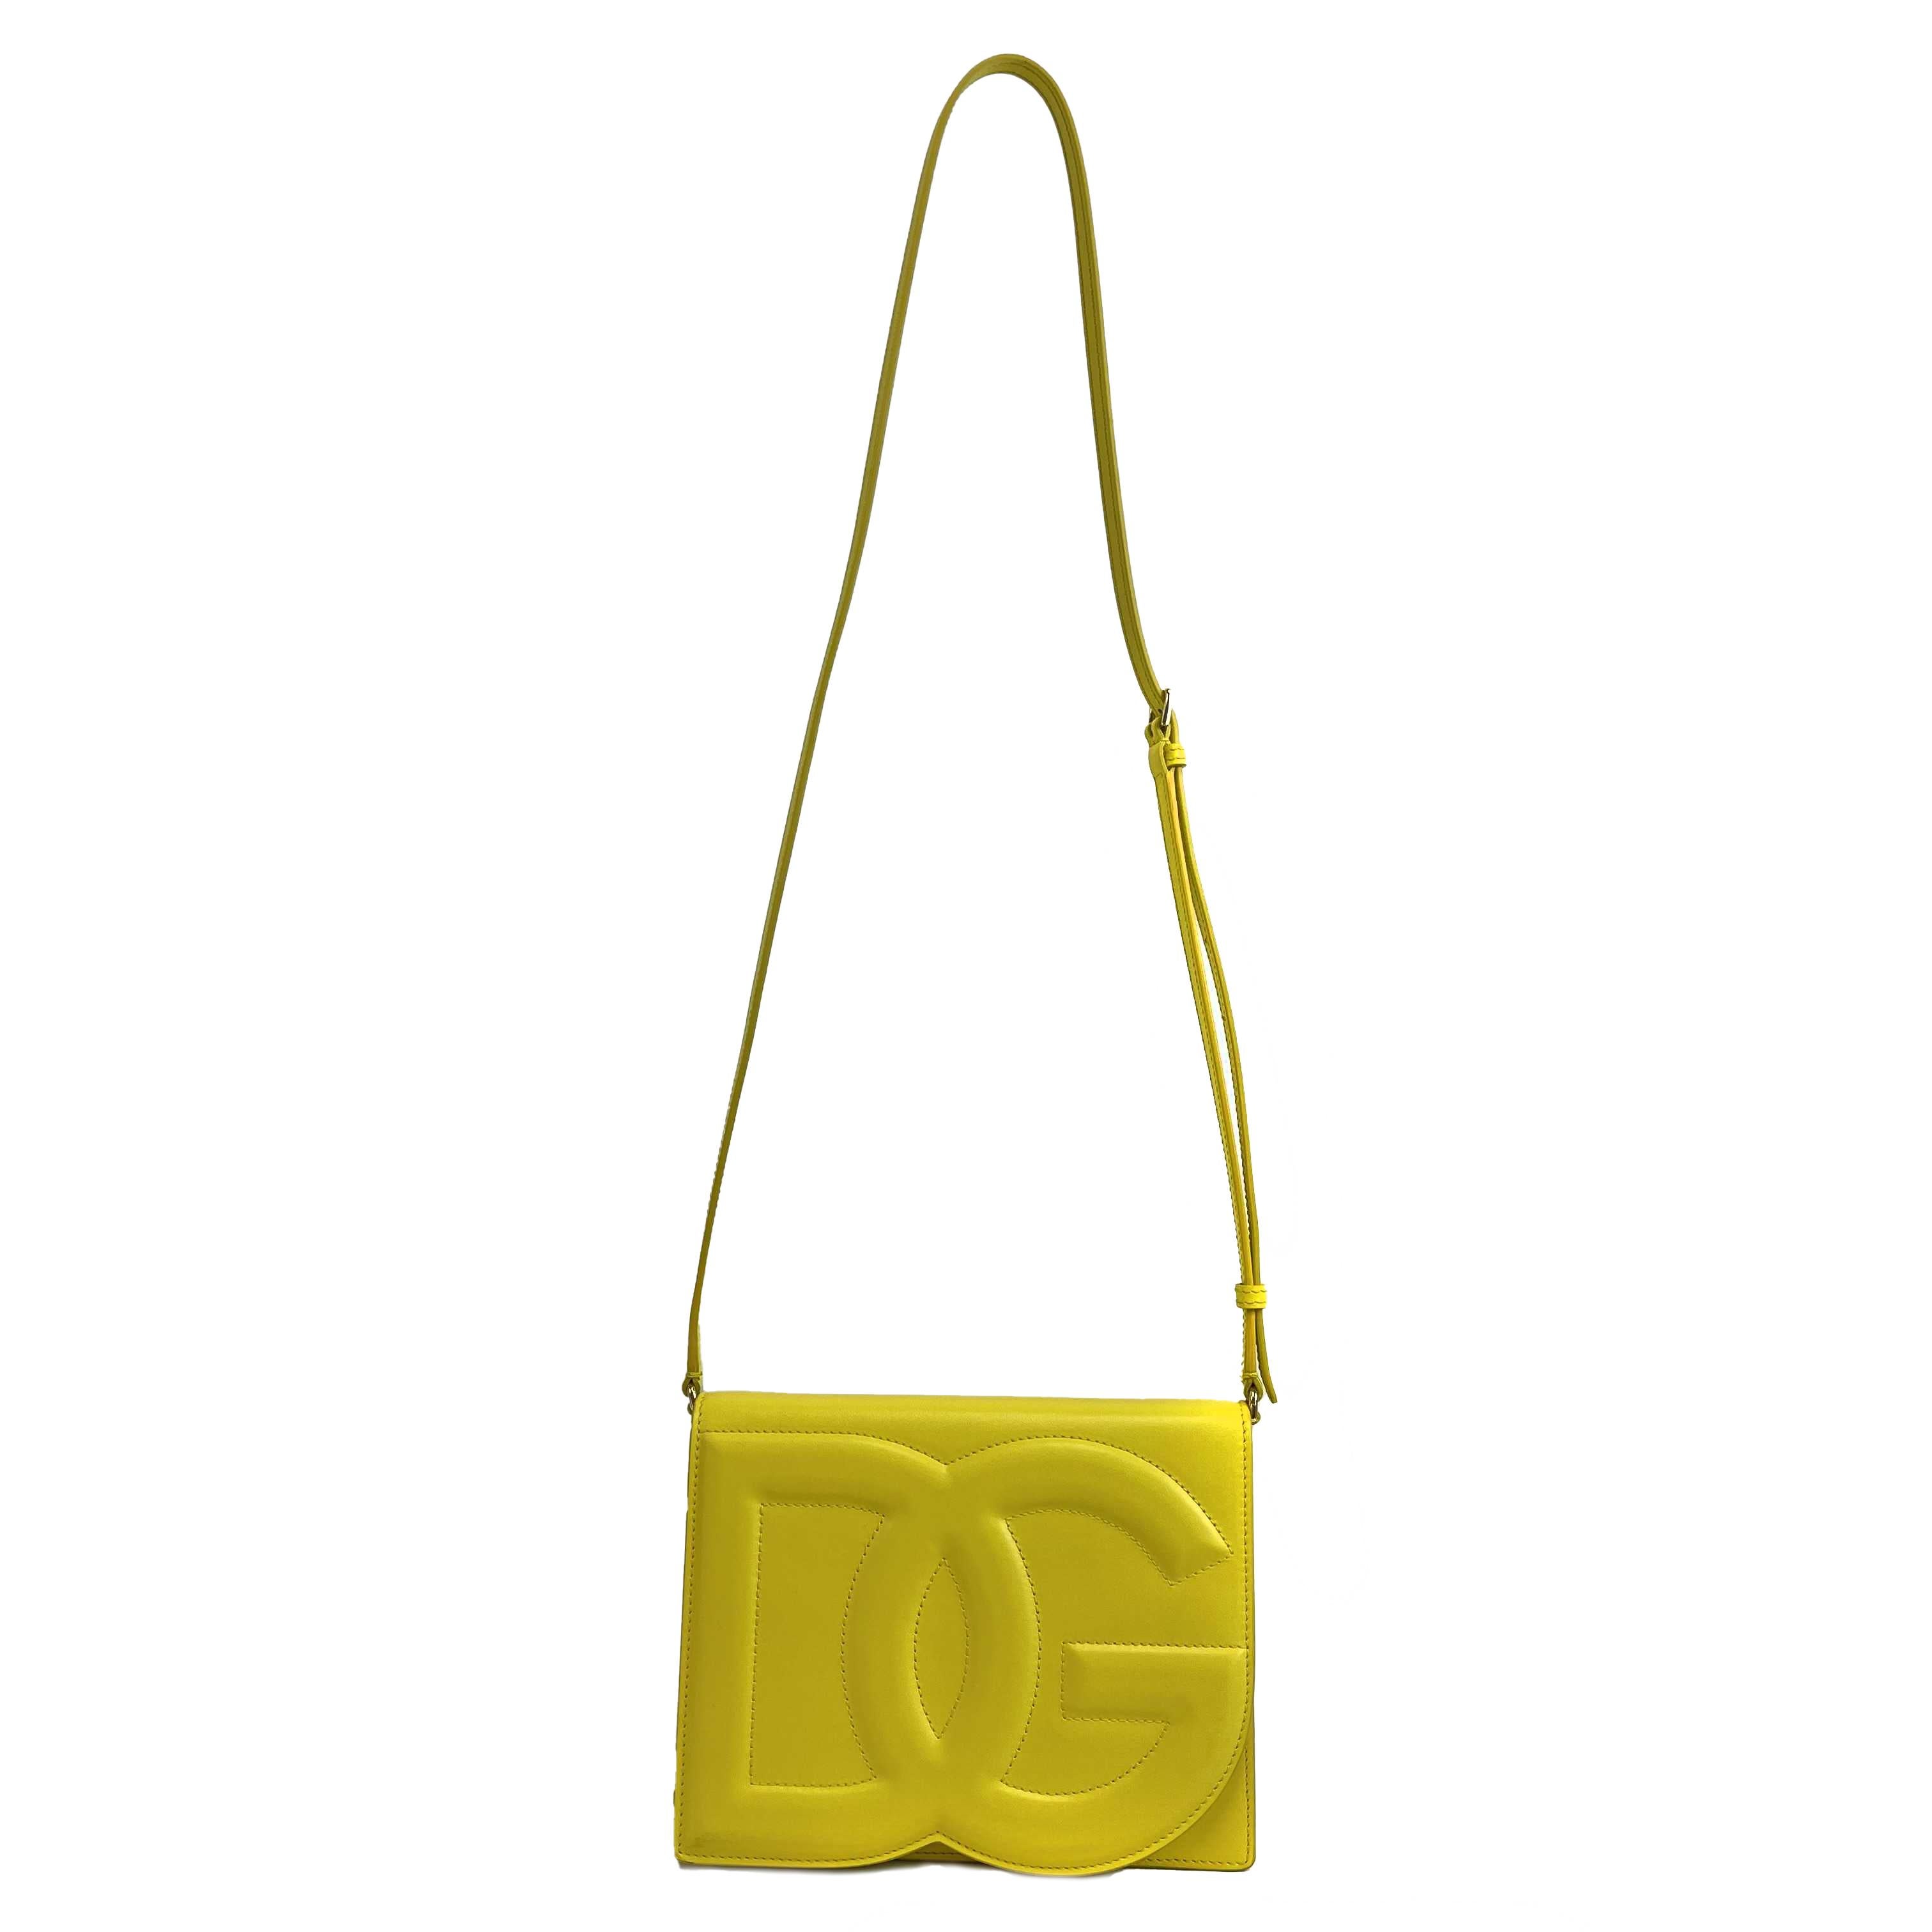 	Dolce & Gabbana - NEW DG Logo Yellow Crossbody / Shoulder Bag 6